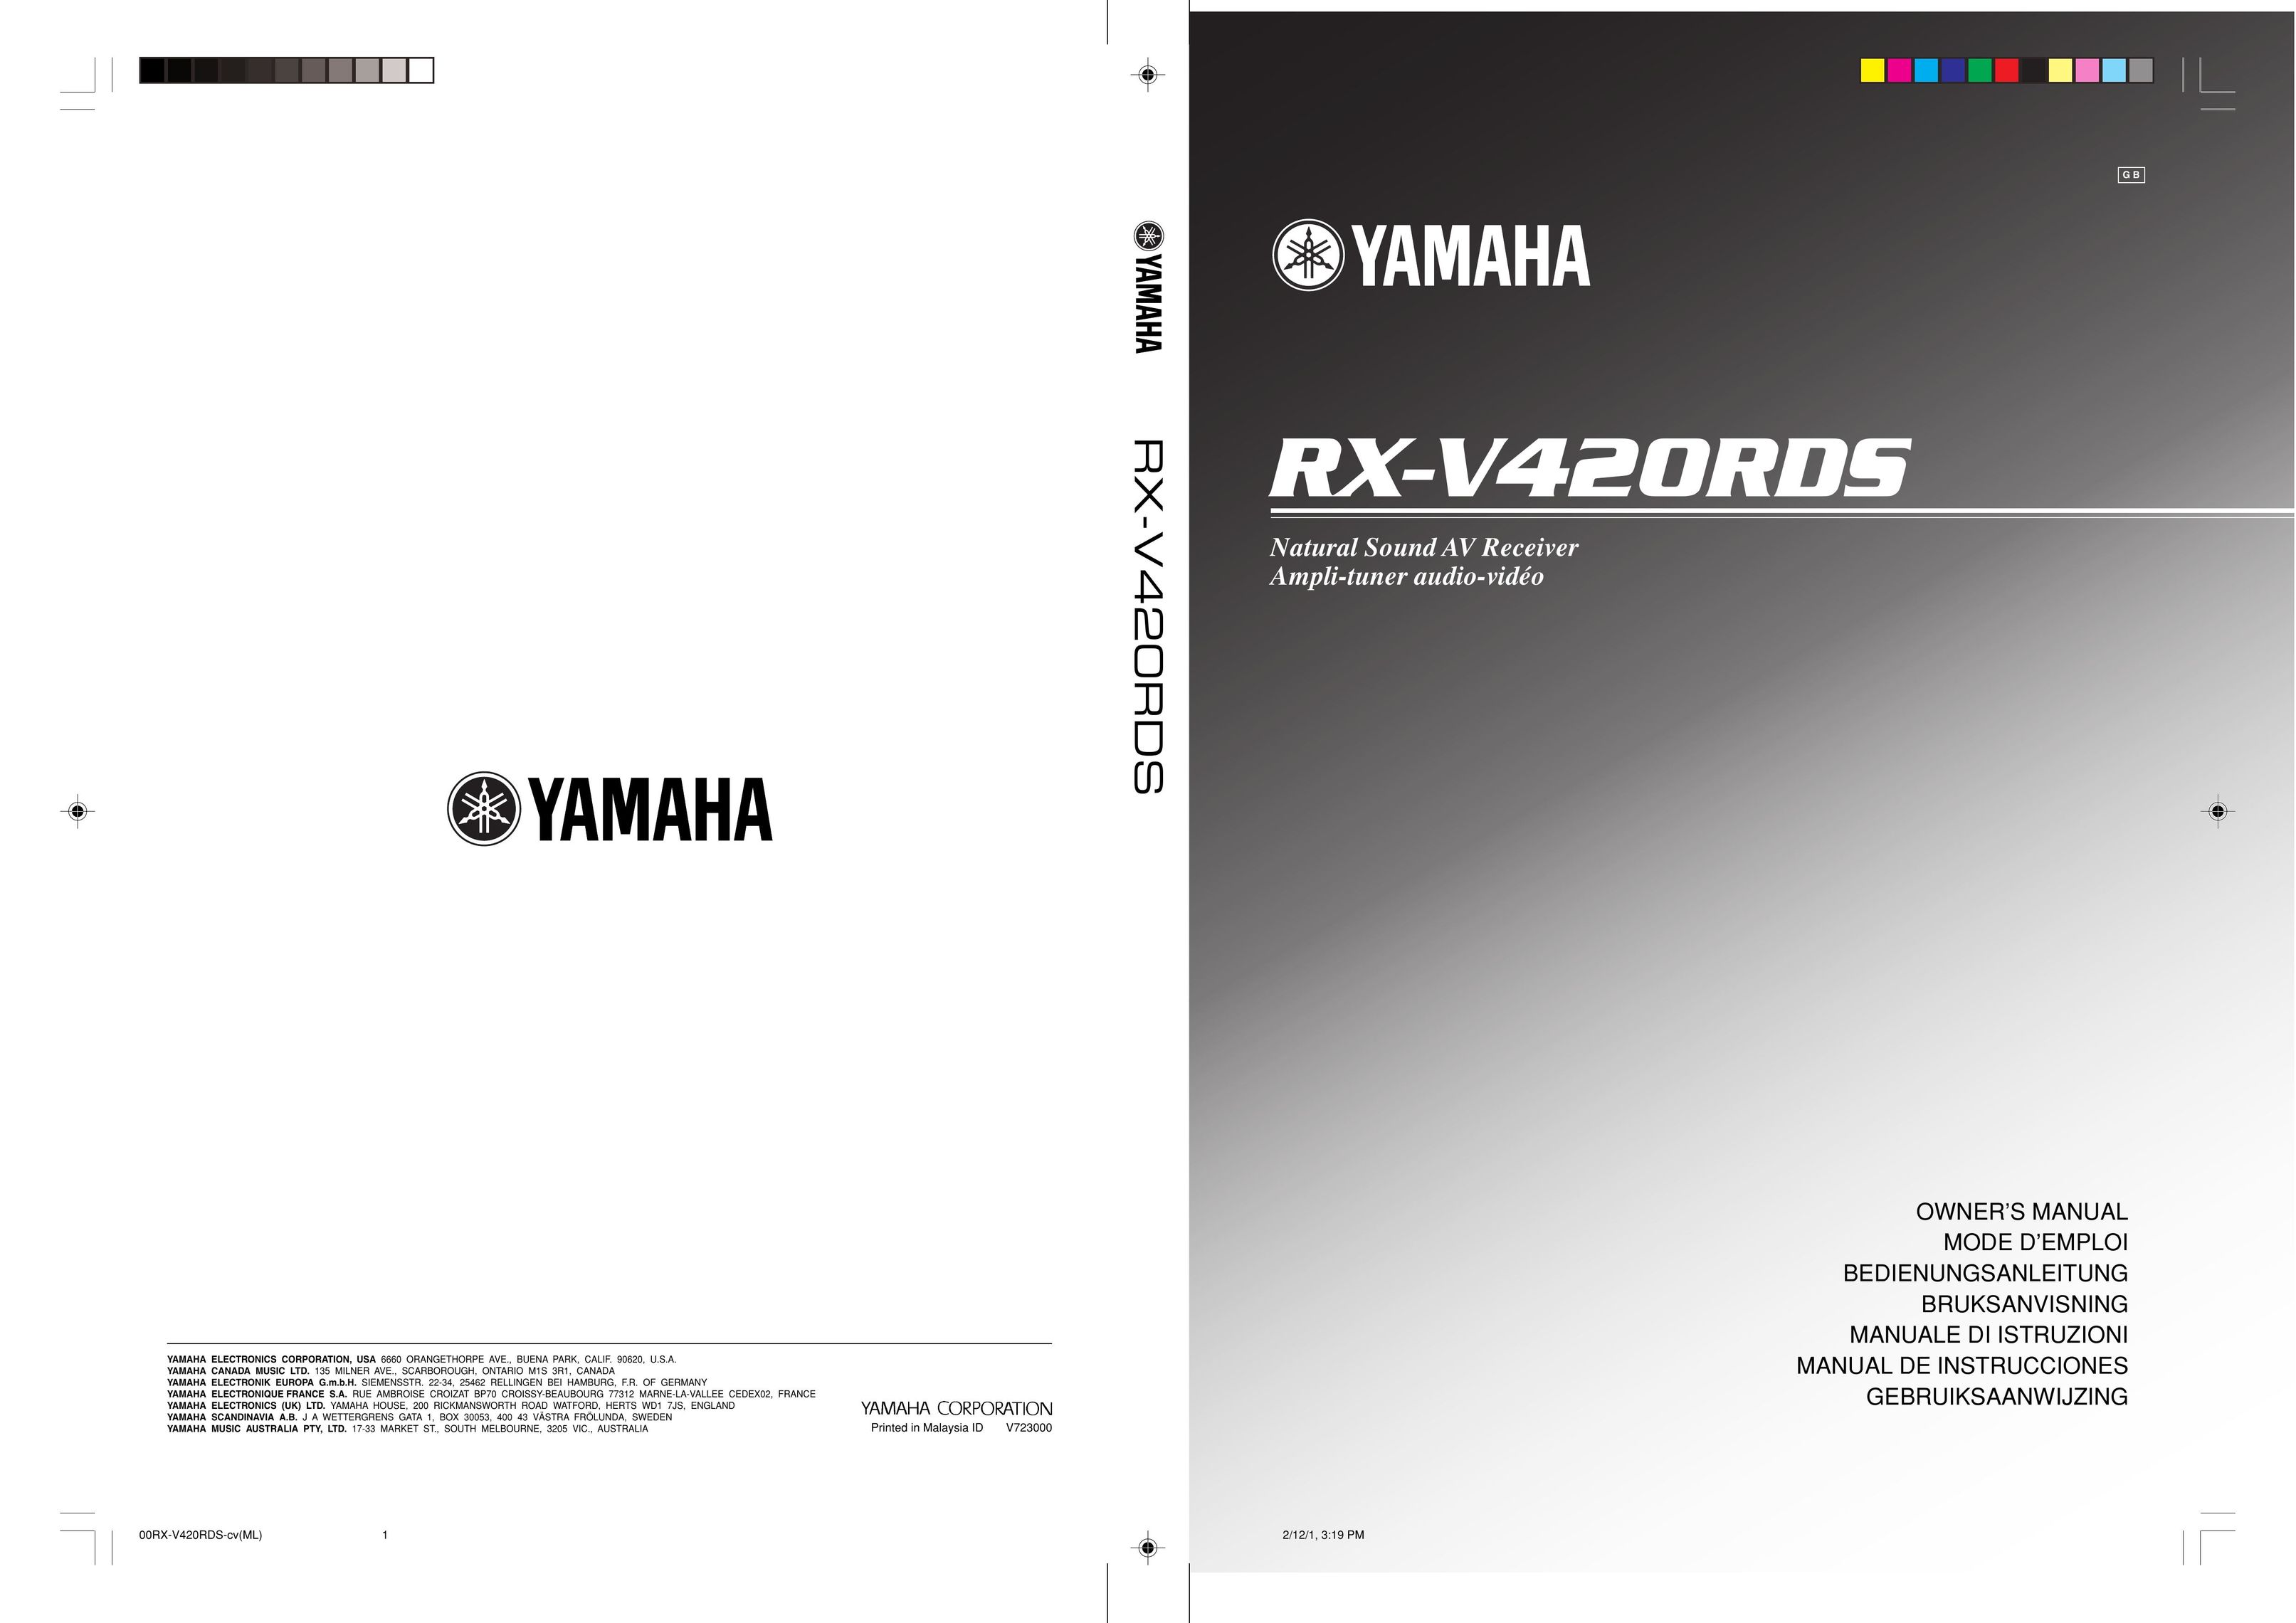 Yamaha RX-V420RDS TV Cables User Manual